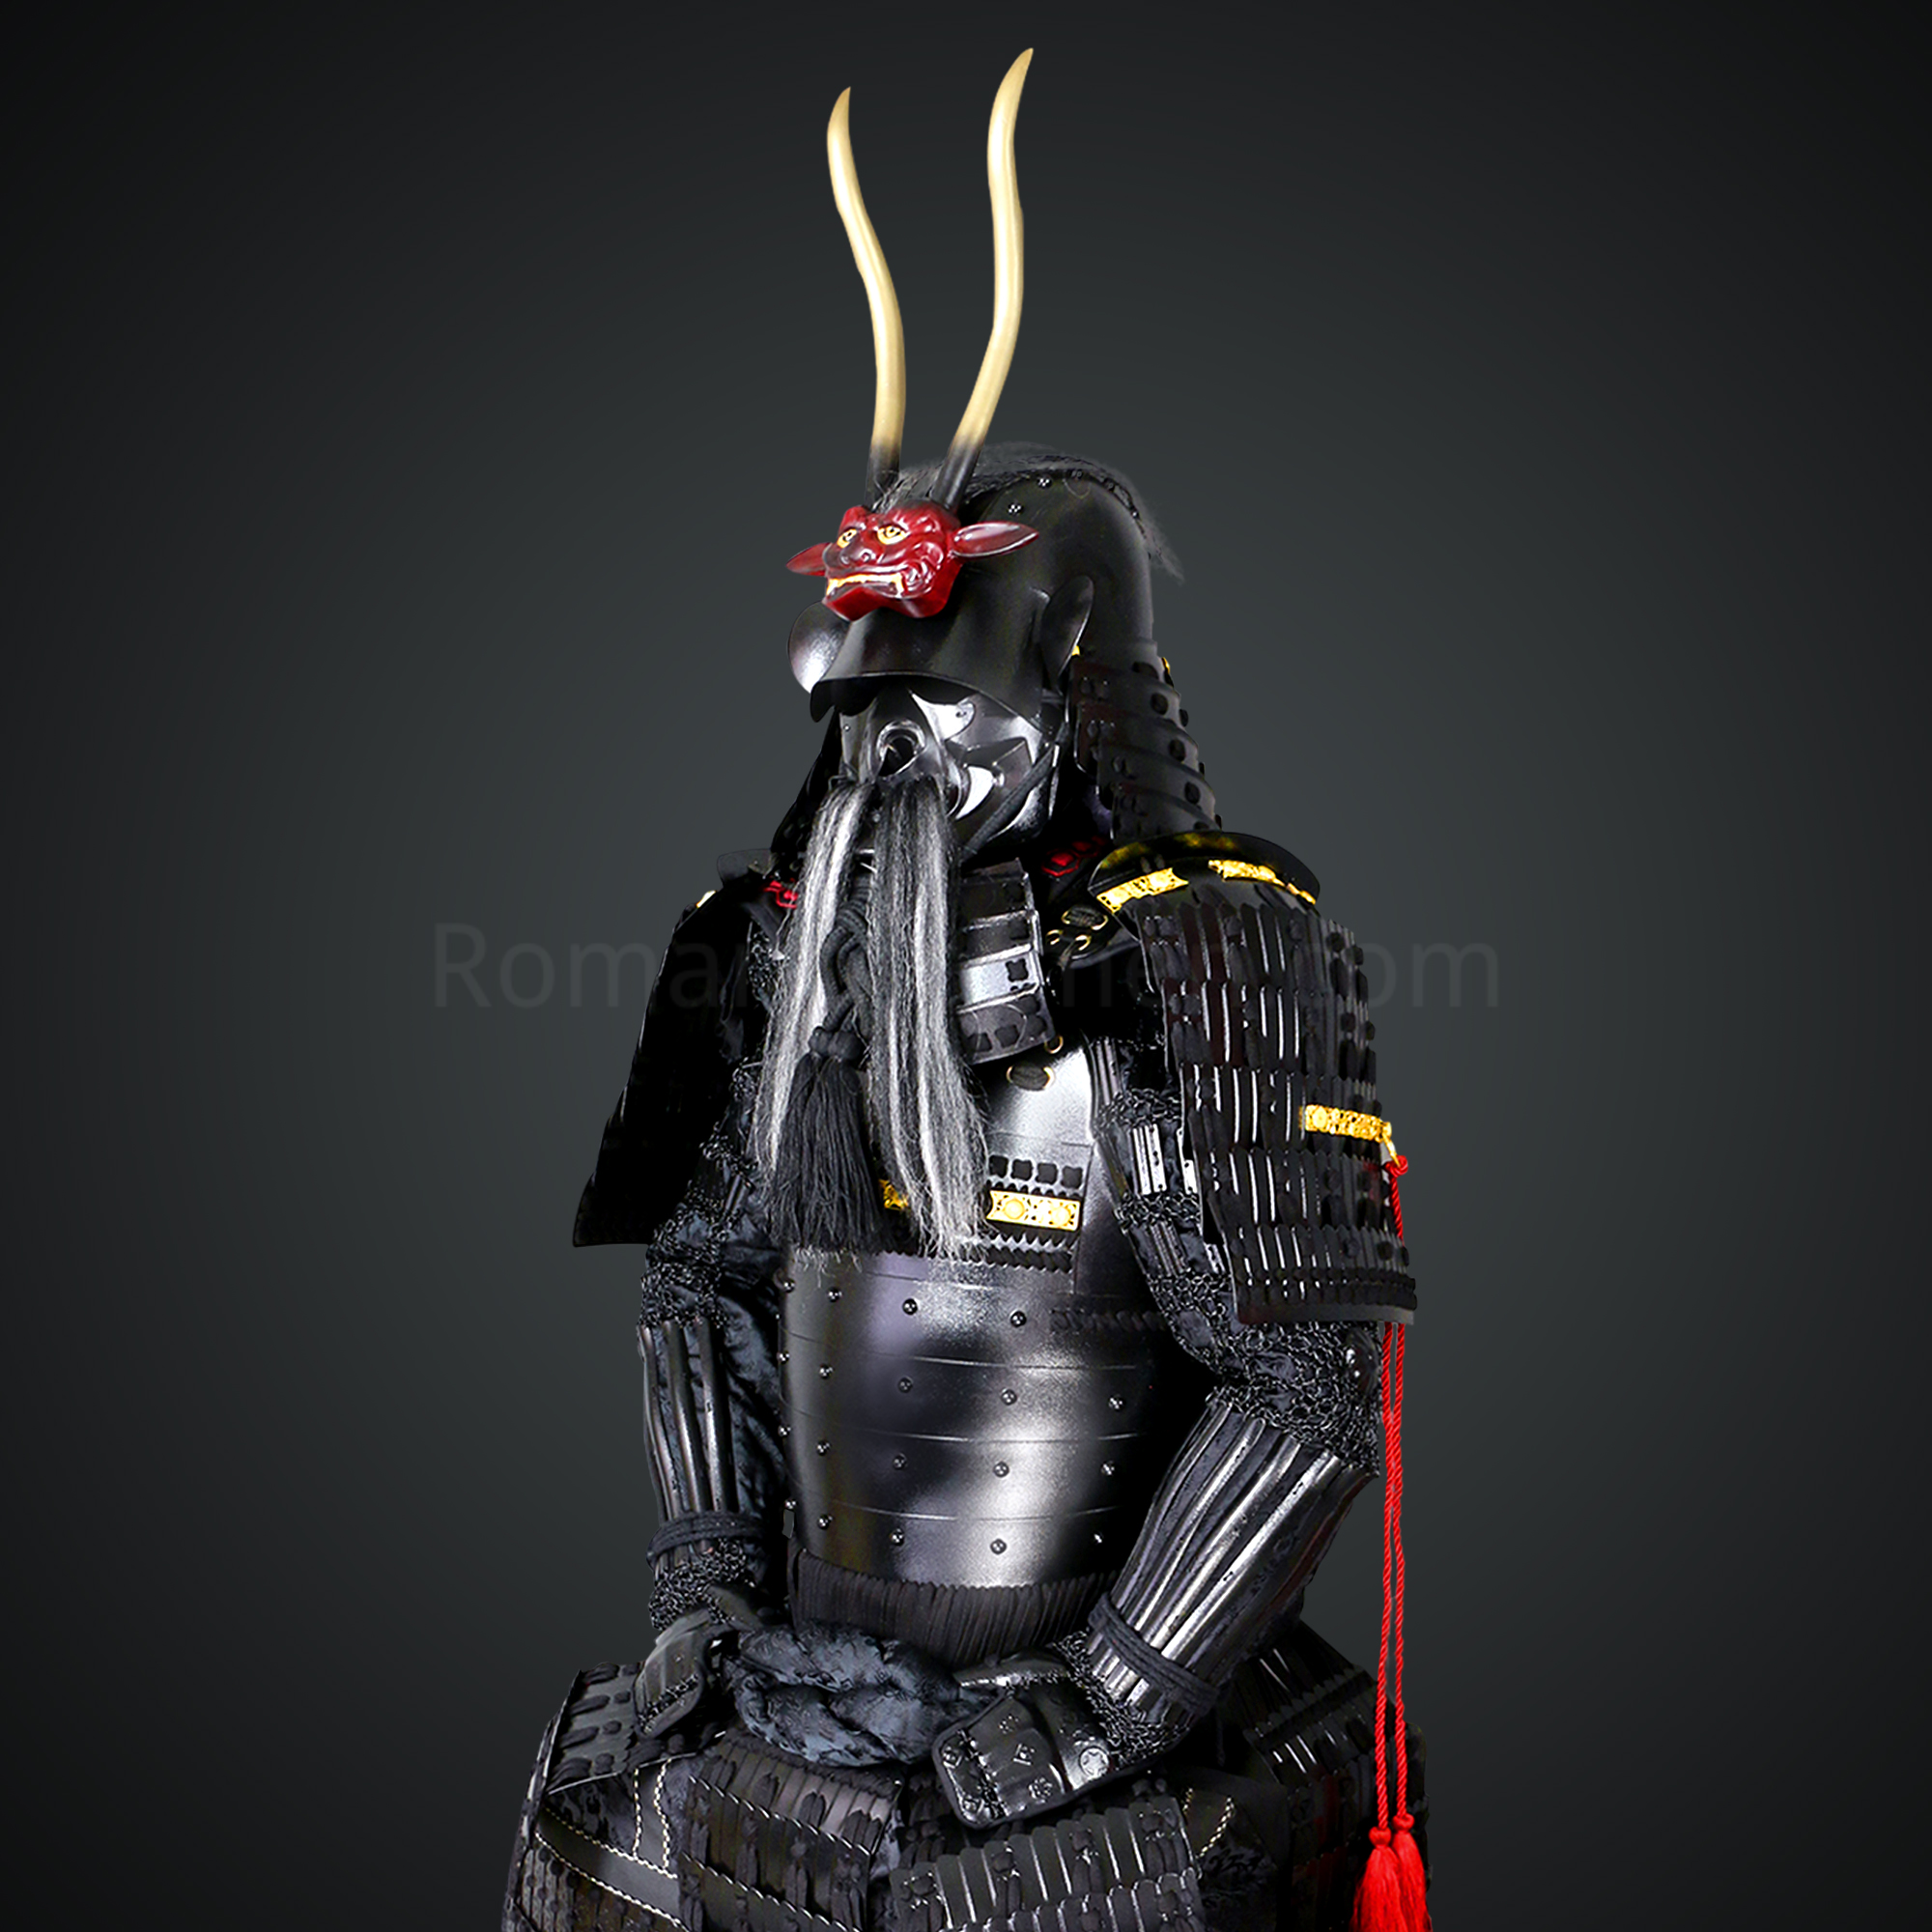 Tsukahara Bokuden Custom Made Handmade Japanese Samurai Armor Life Size